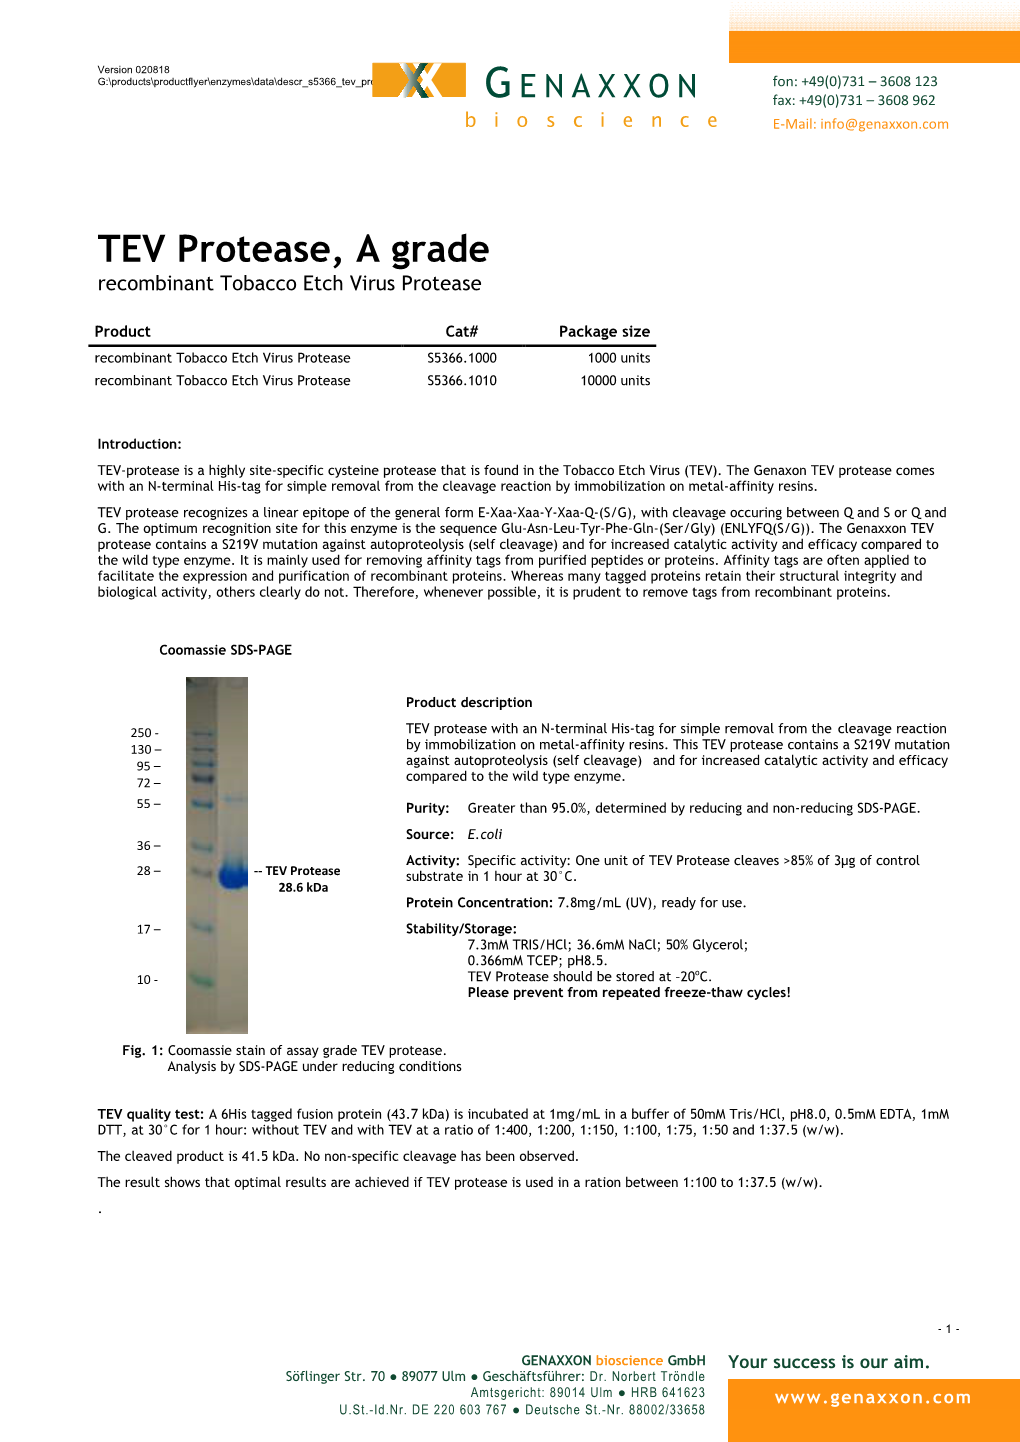 TEV Protease, a Grade Recombinant Tobacco Etch Virus Protease